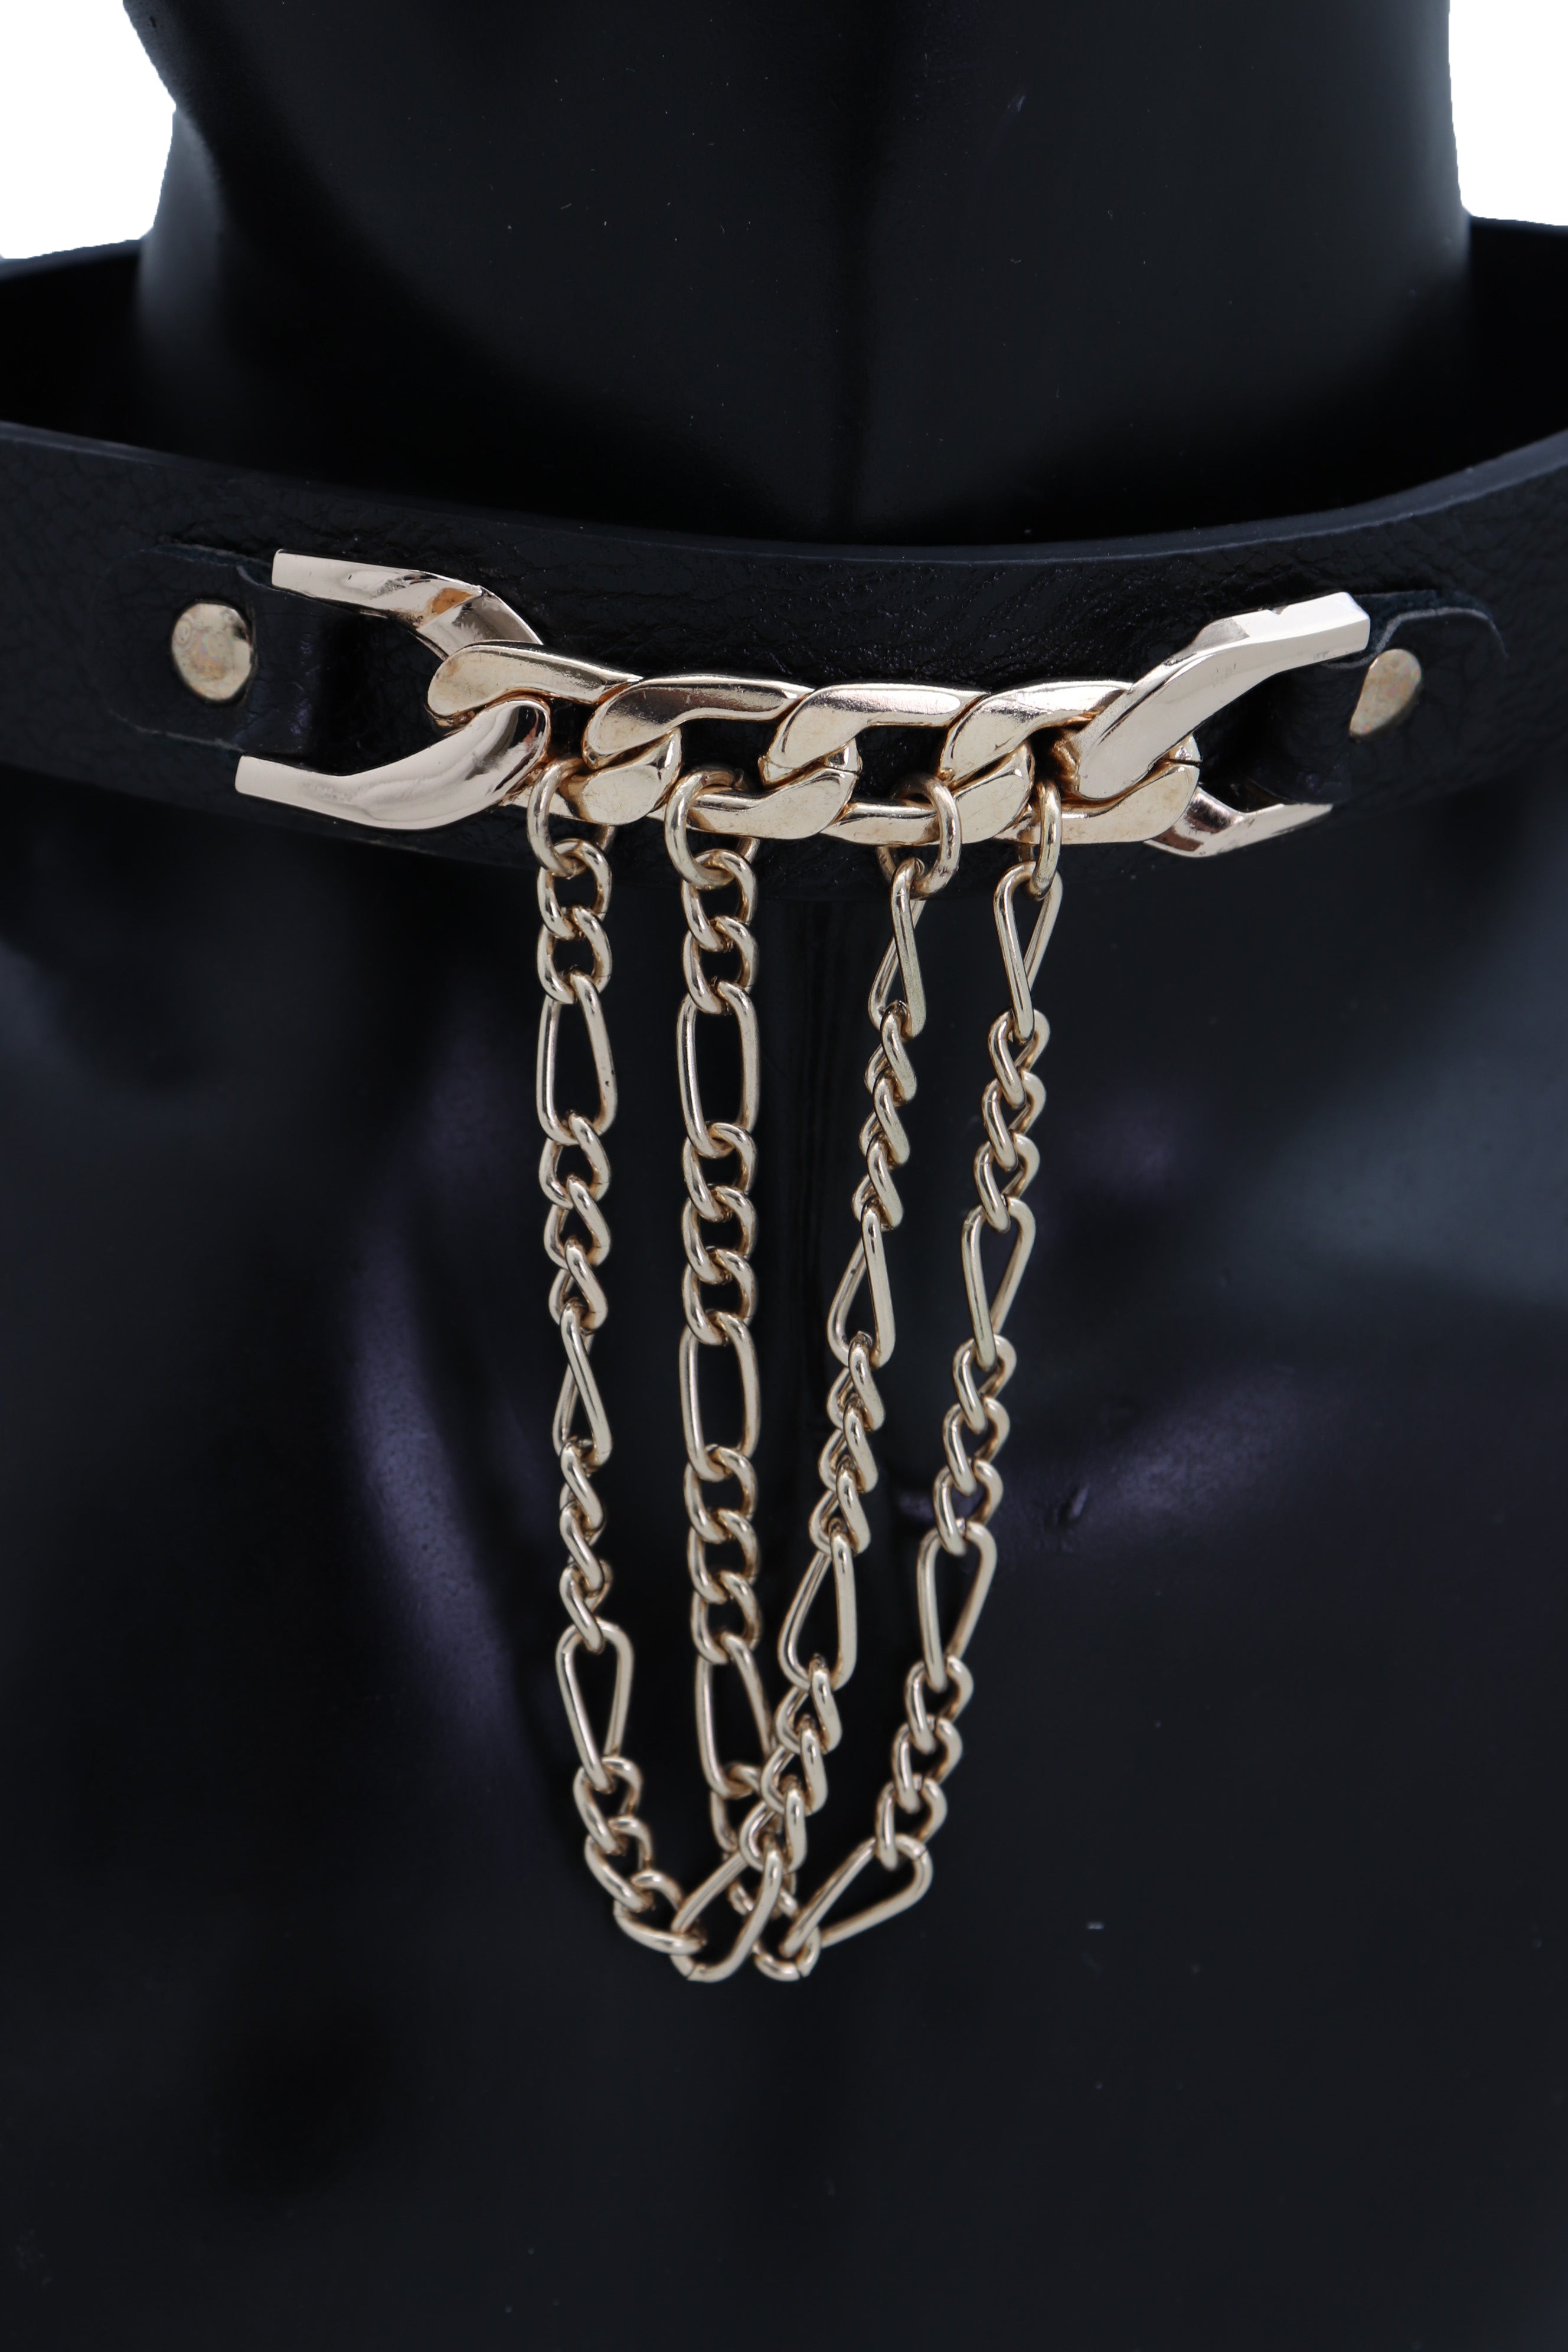 Brand New Women Fashion Gold Metal Chain Links Pendant Black Strap Cho ...